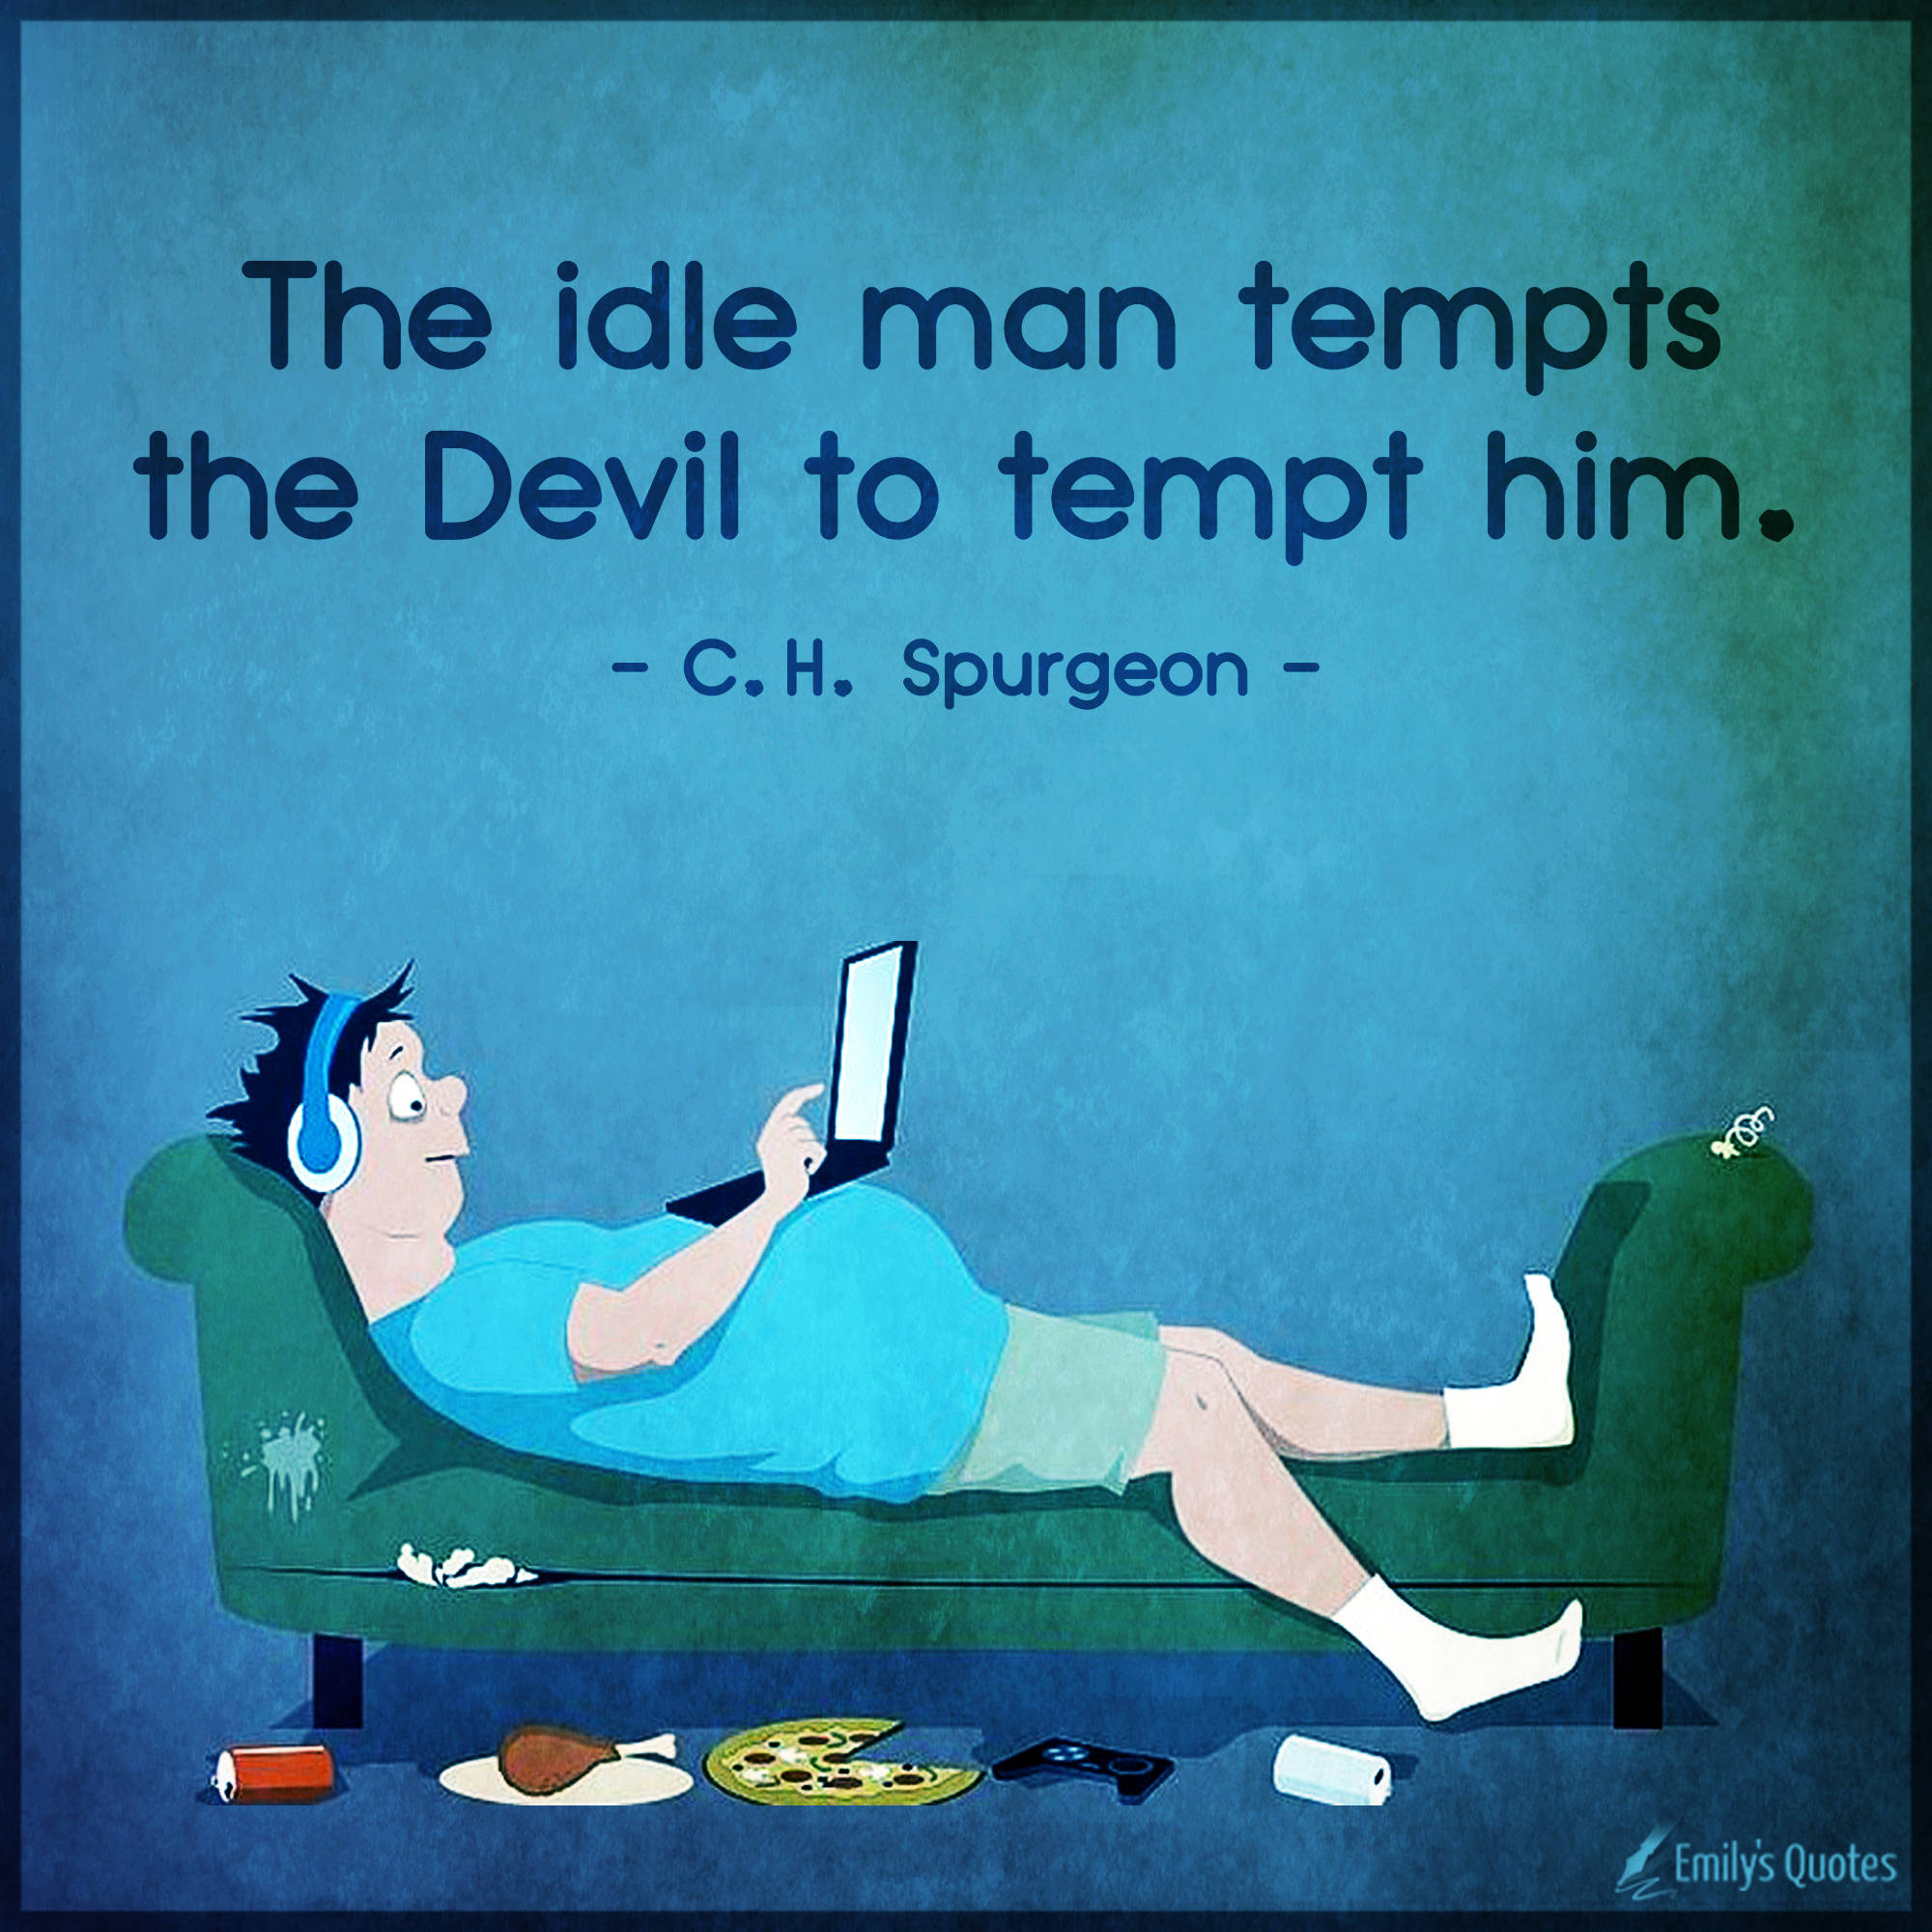 The idle man tempts the Devil to tempt him